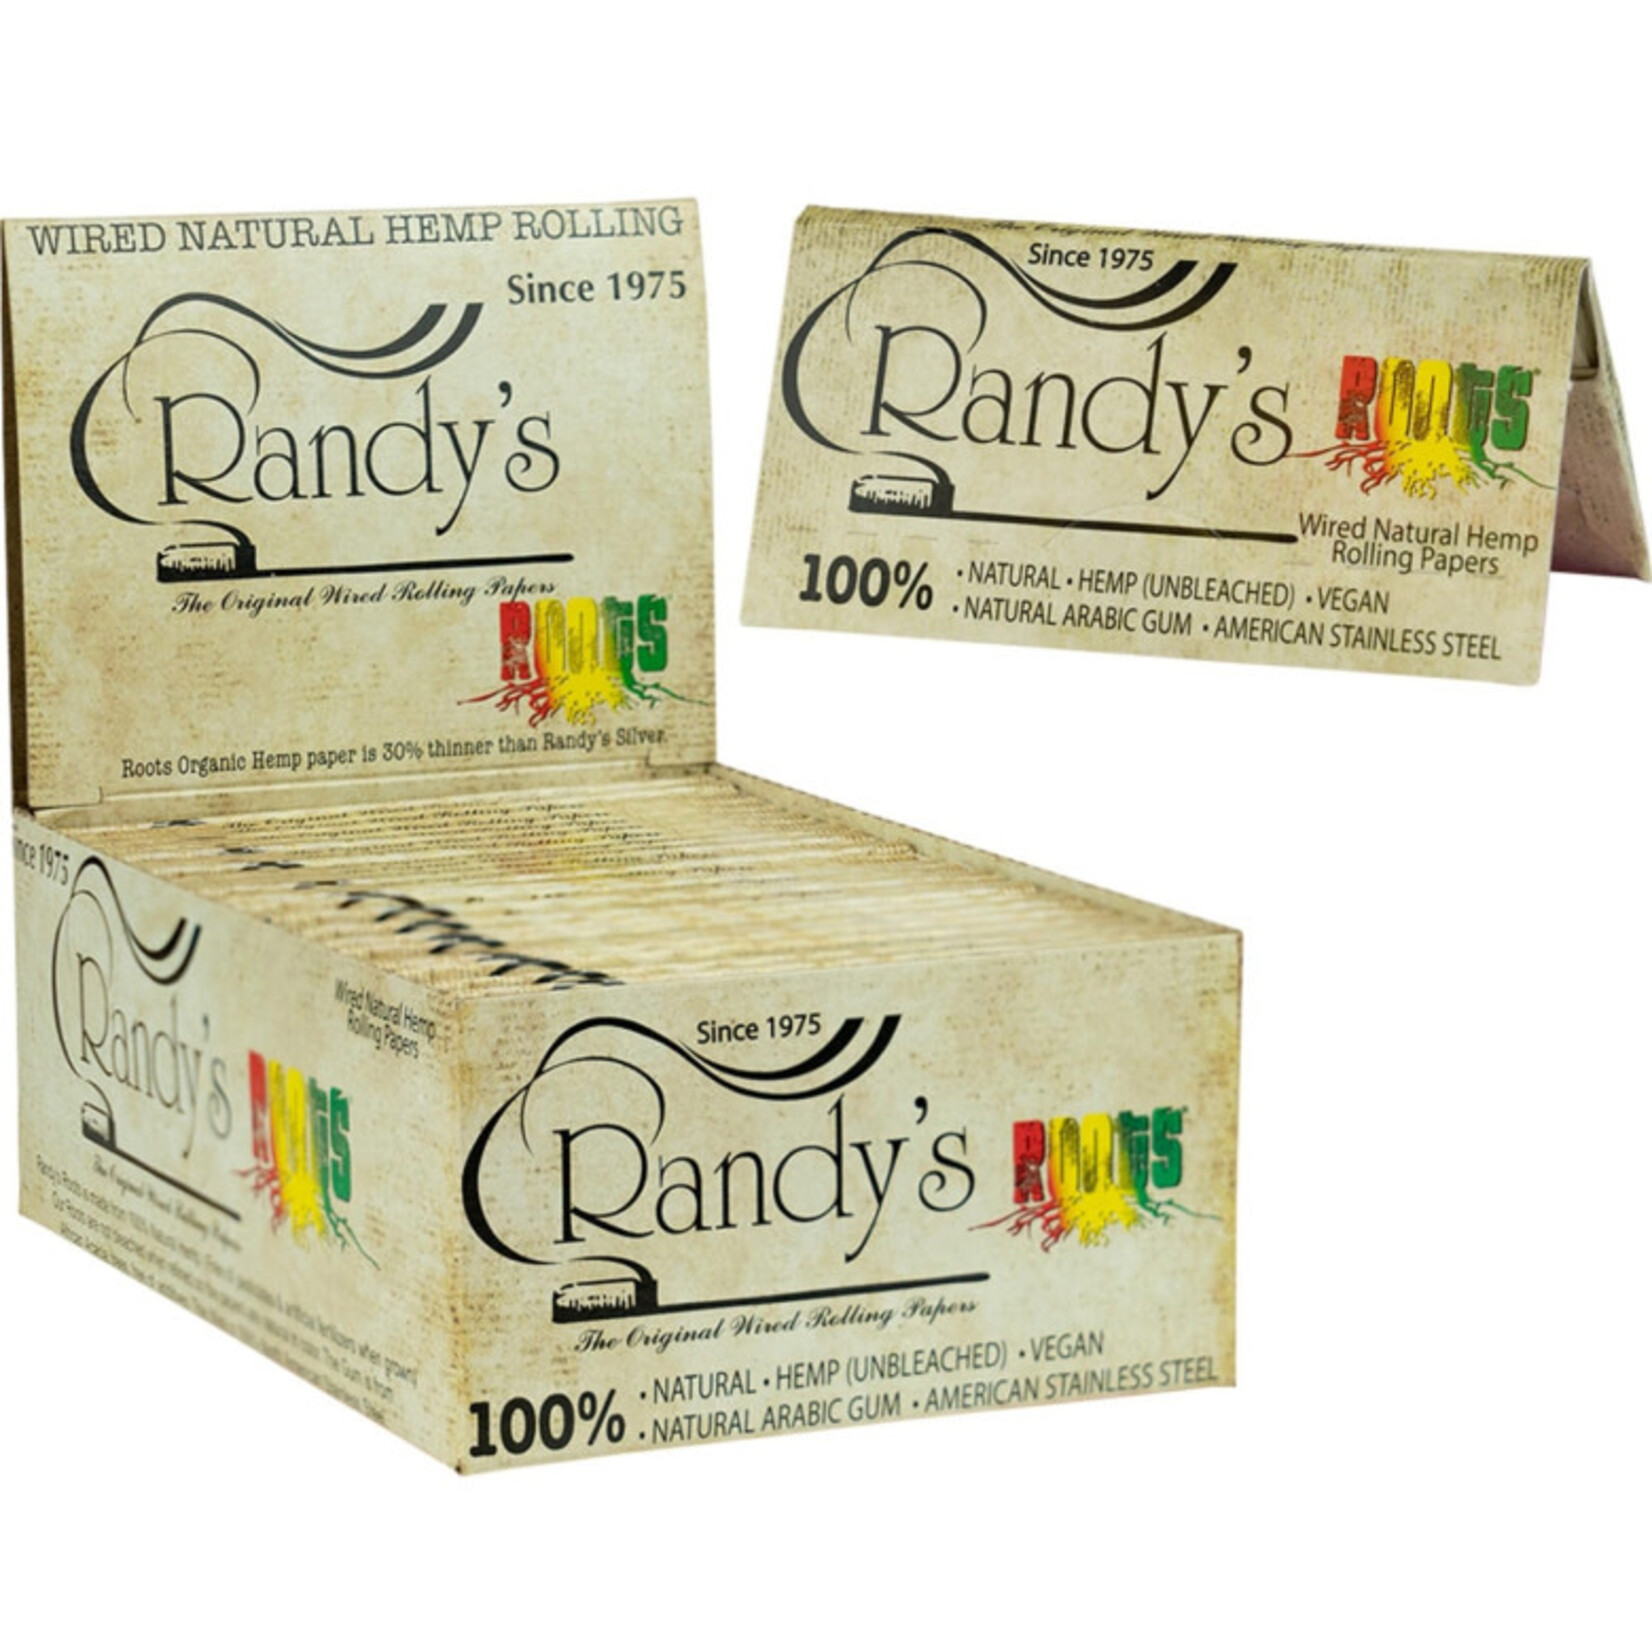 Randy's Randys Premium Rolling Papers